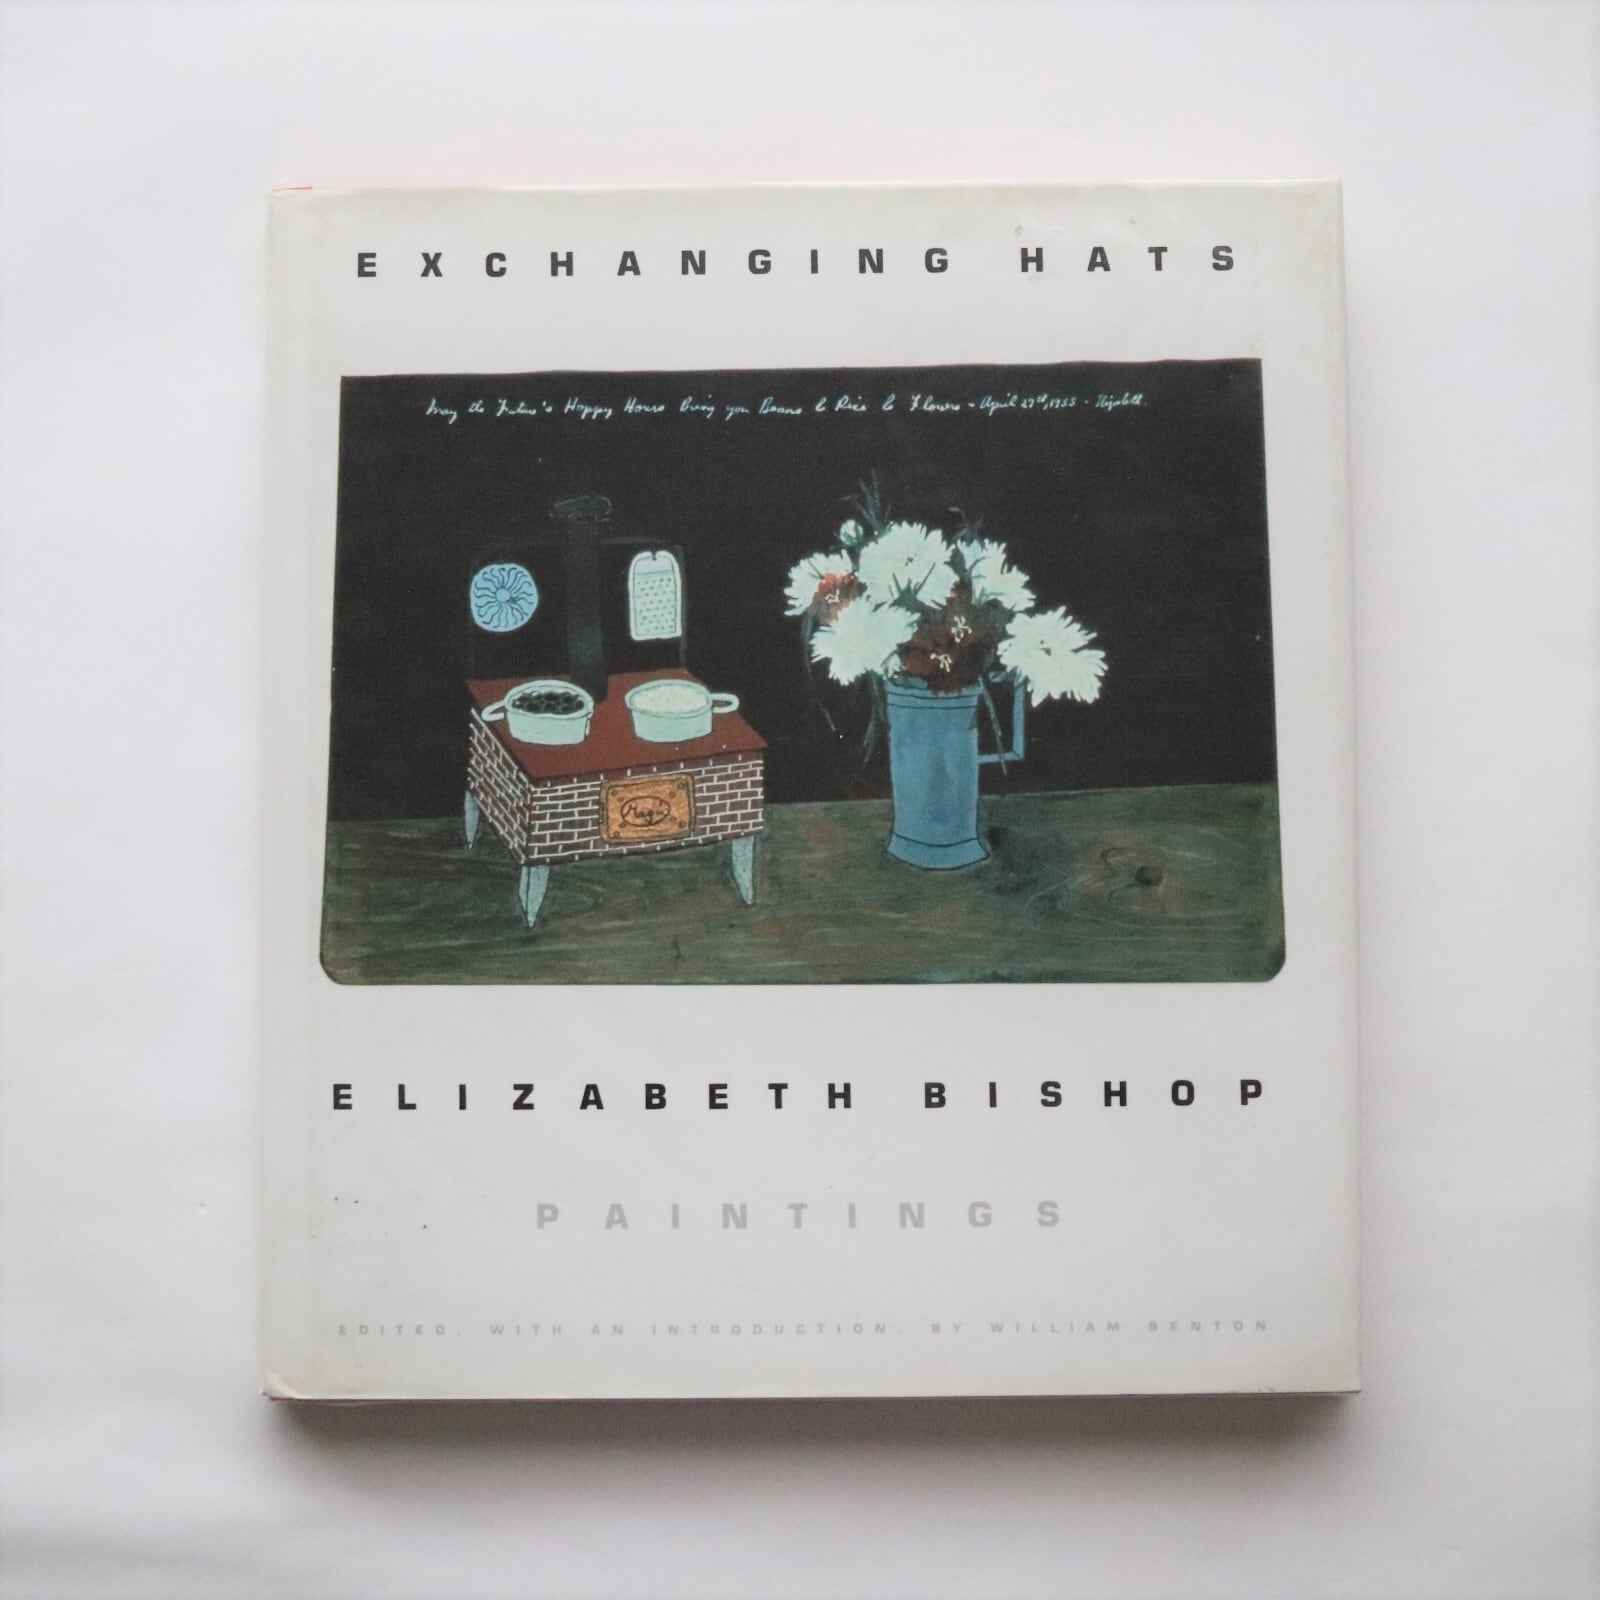 Exchanging Hats: Paintings  / Elizabeth Bishop (Author),  / William Benton